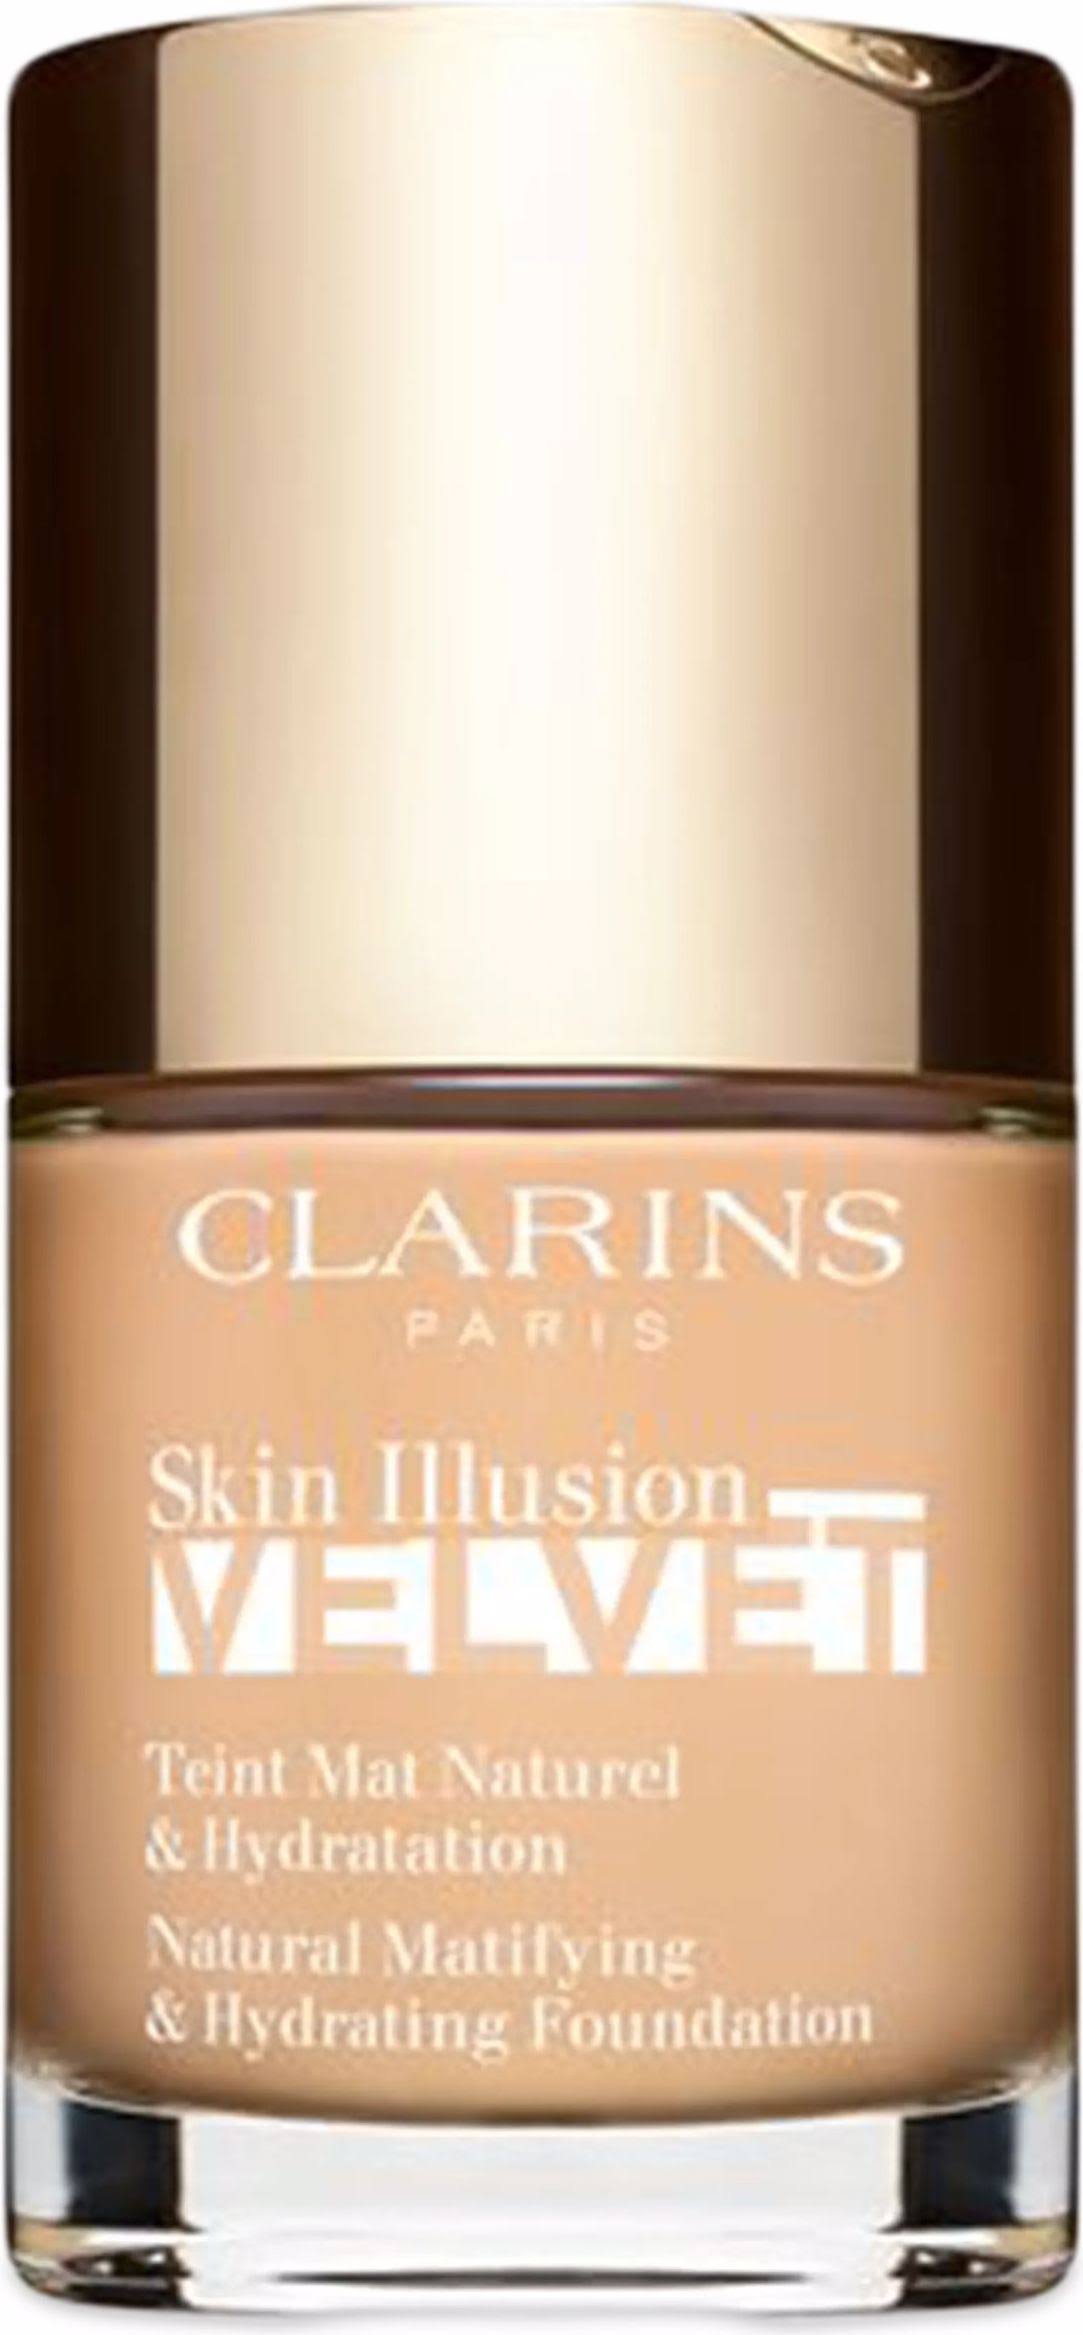 Clarins Skin Illusion Velvet - Foundation 103N